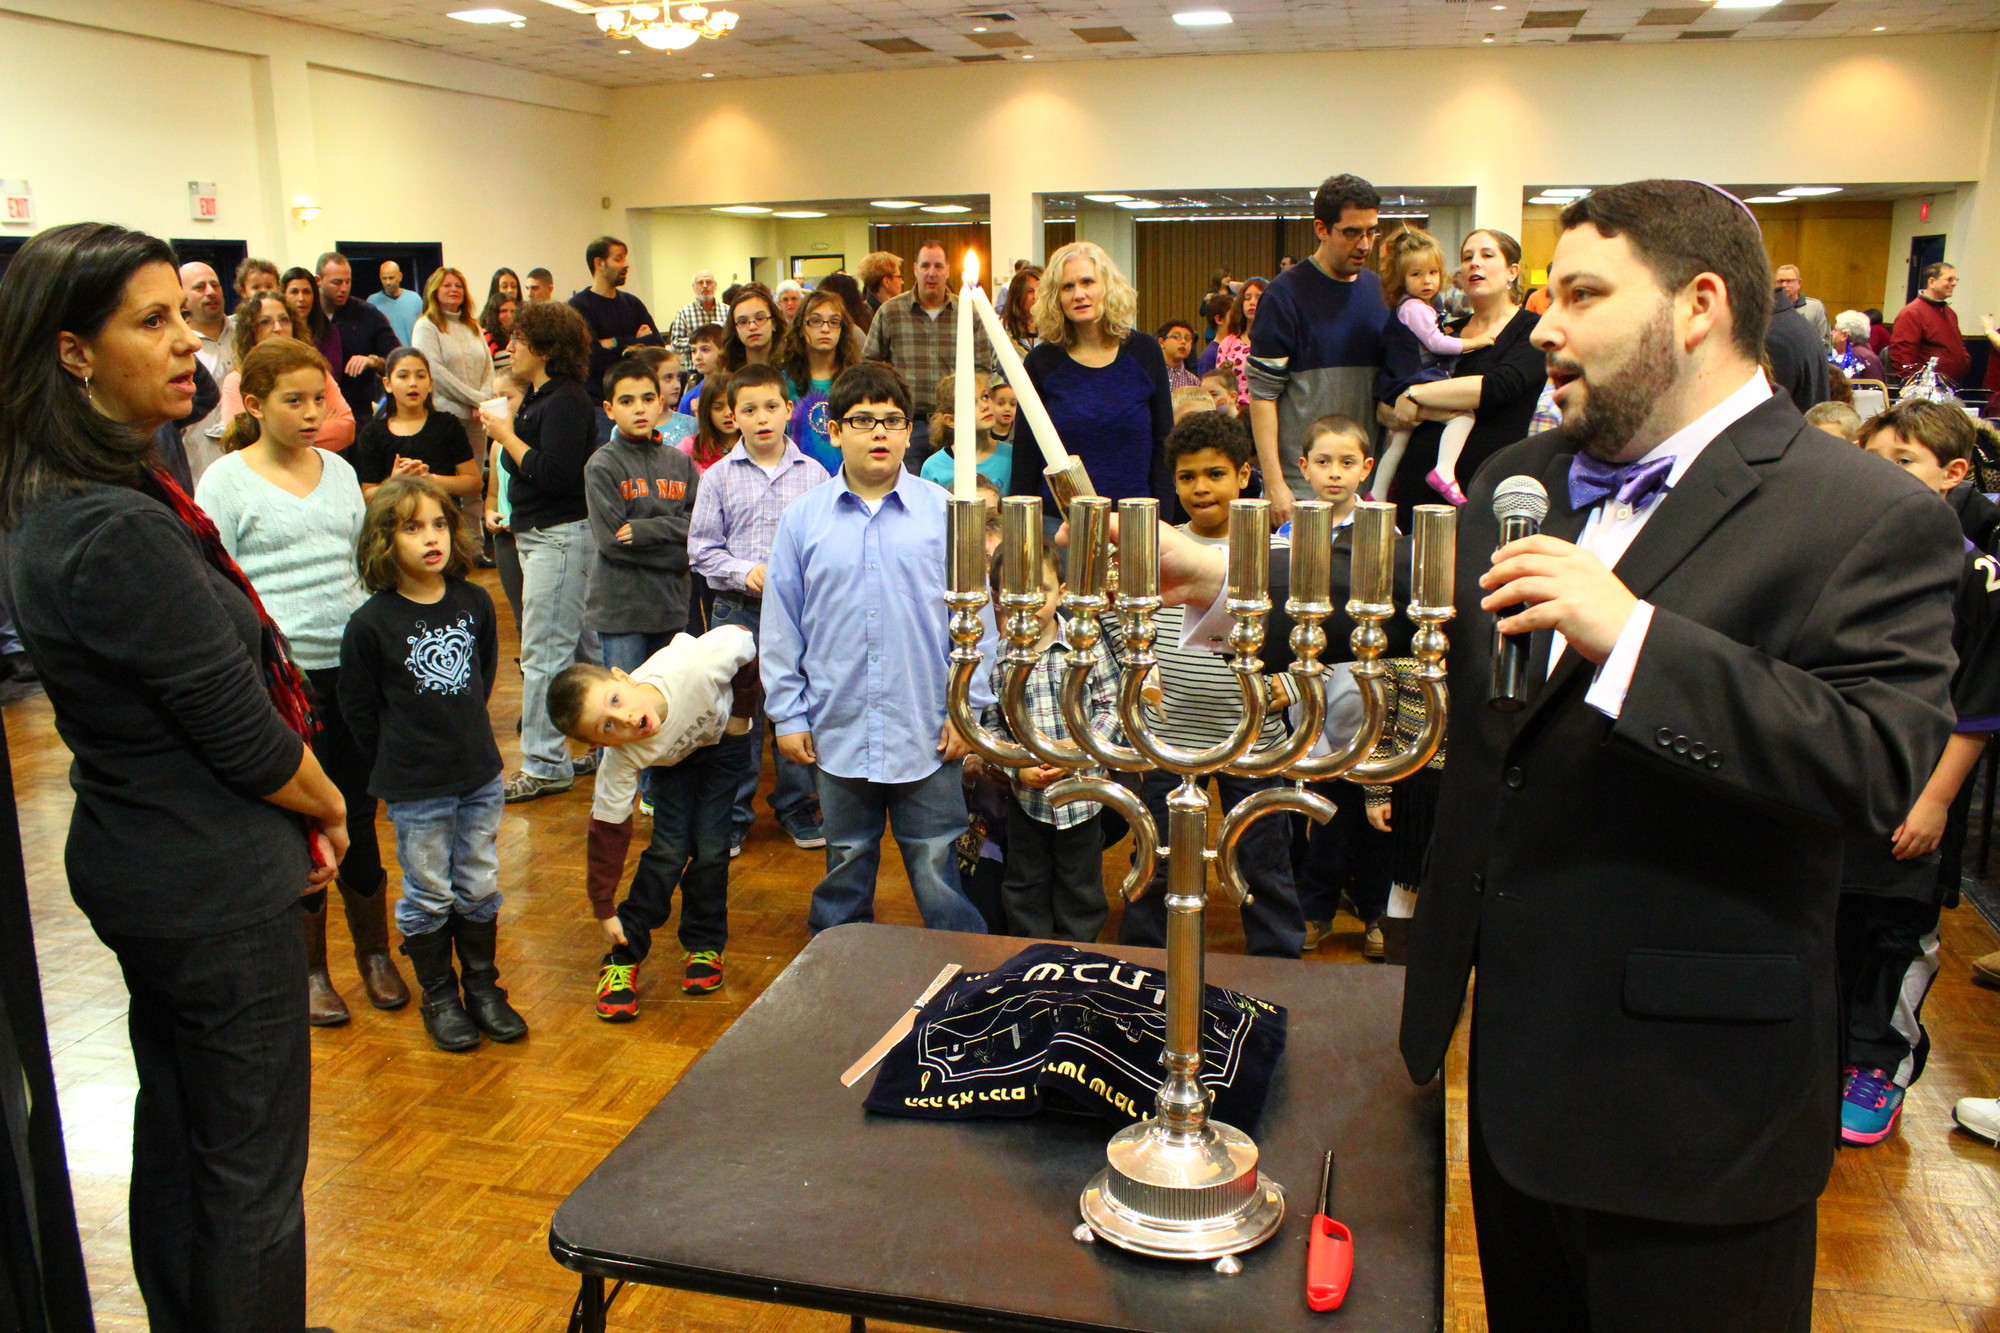 Rabbi Daniel Bar-Nahum of Temple Emanu-El, and congregant Lisa Shubin, lit the menorah in front of a large crowd of young spectators.